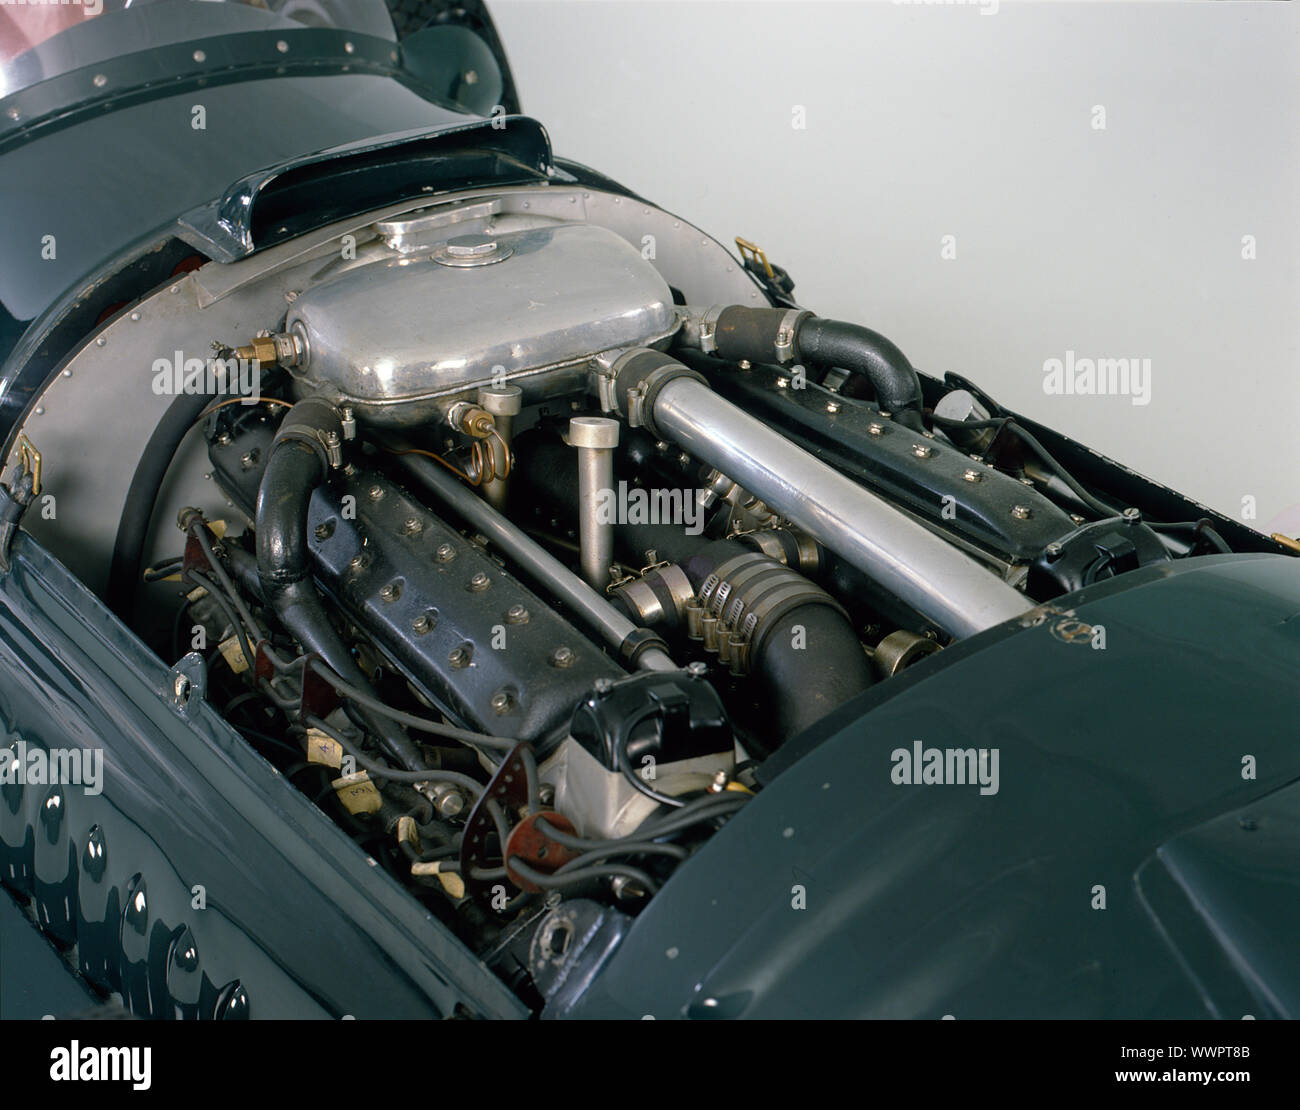 1950 BRM V16 motore Foto stock - Alamy